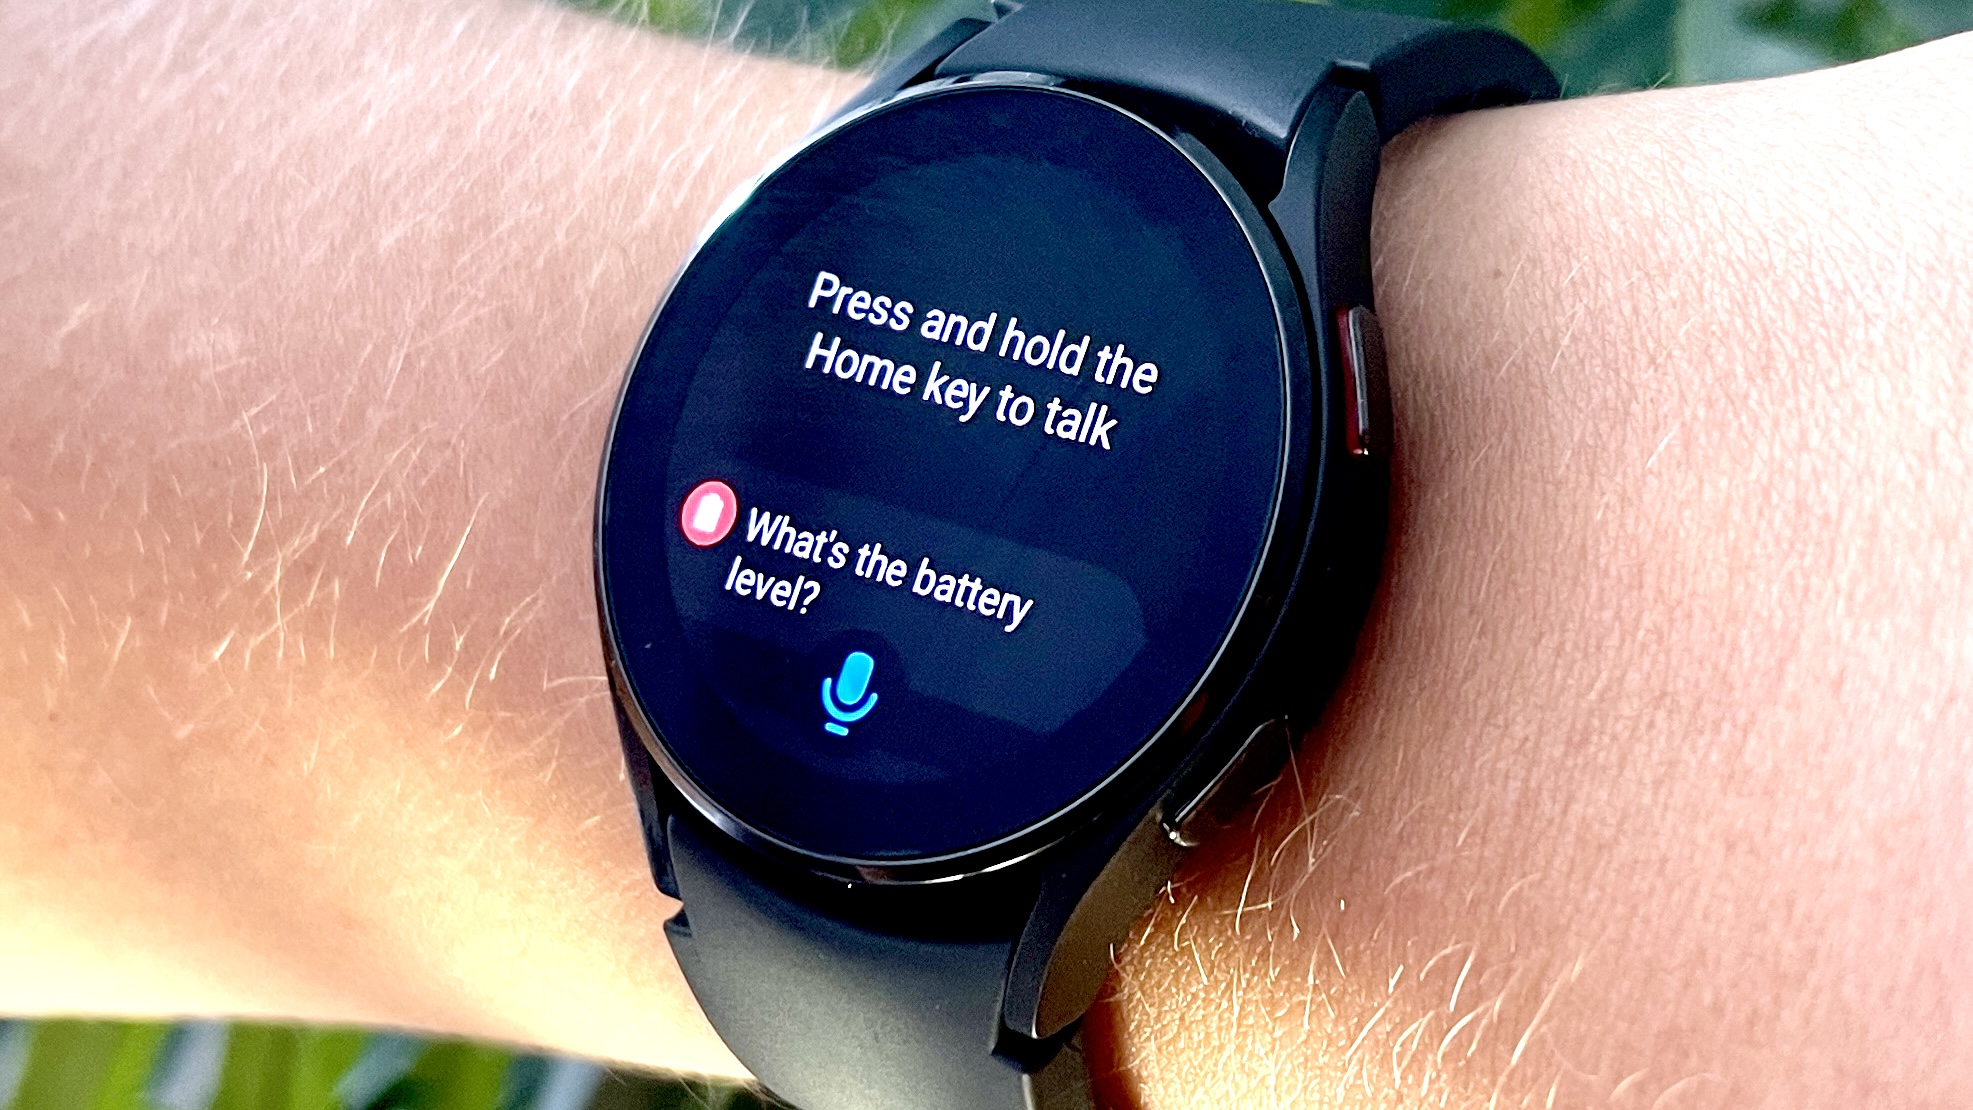 Samsung Galaxy Watch 4 Wear OS features - Google Assistant